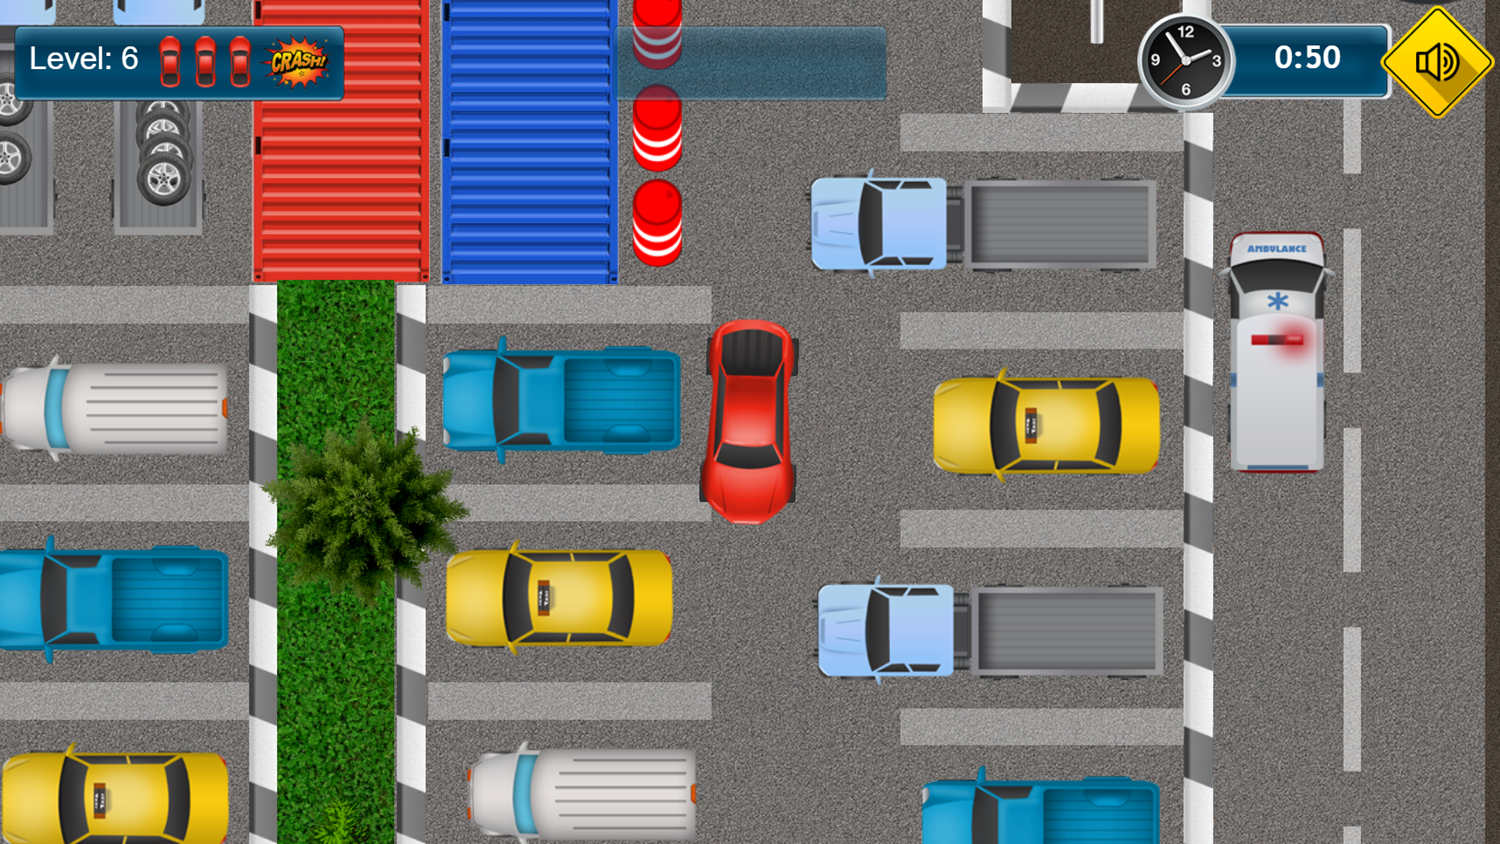 Parking Game Final Level Screenshot.